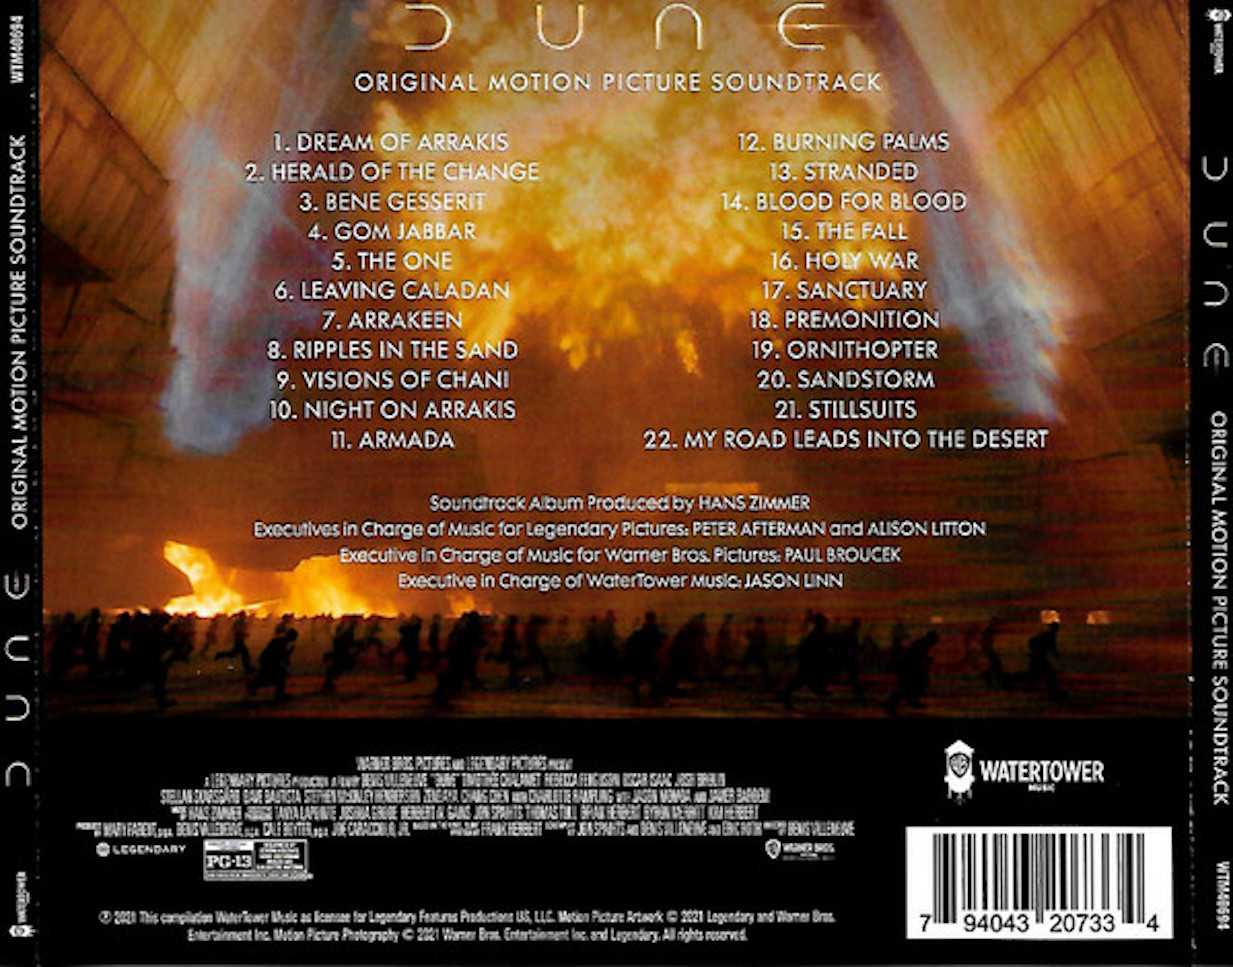 Саундтрек dune. Dune (Original Motion picture Soundtrack). Dune 2021 DVD Cover. Дюна саундтрек 2021. Dune Original Motion picture Soundtrack Hans Zimmer.